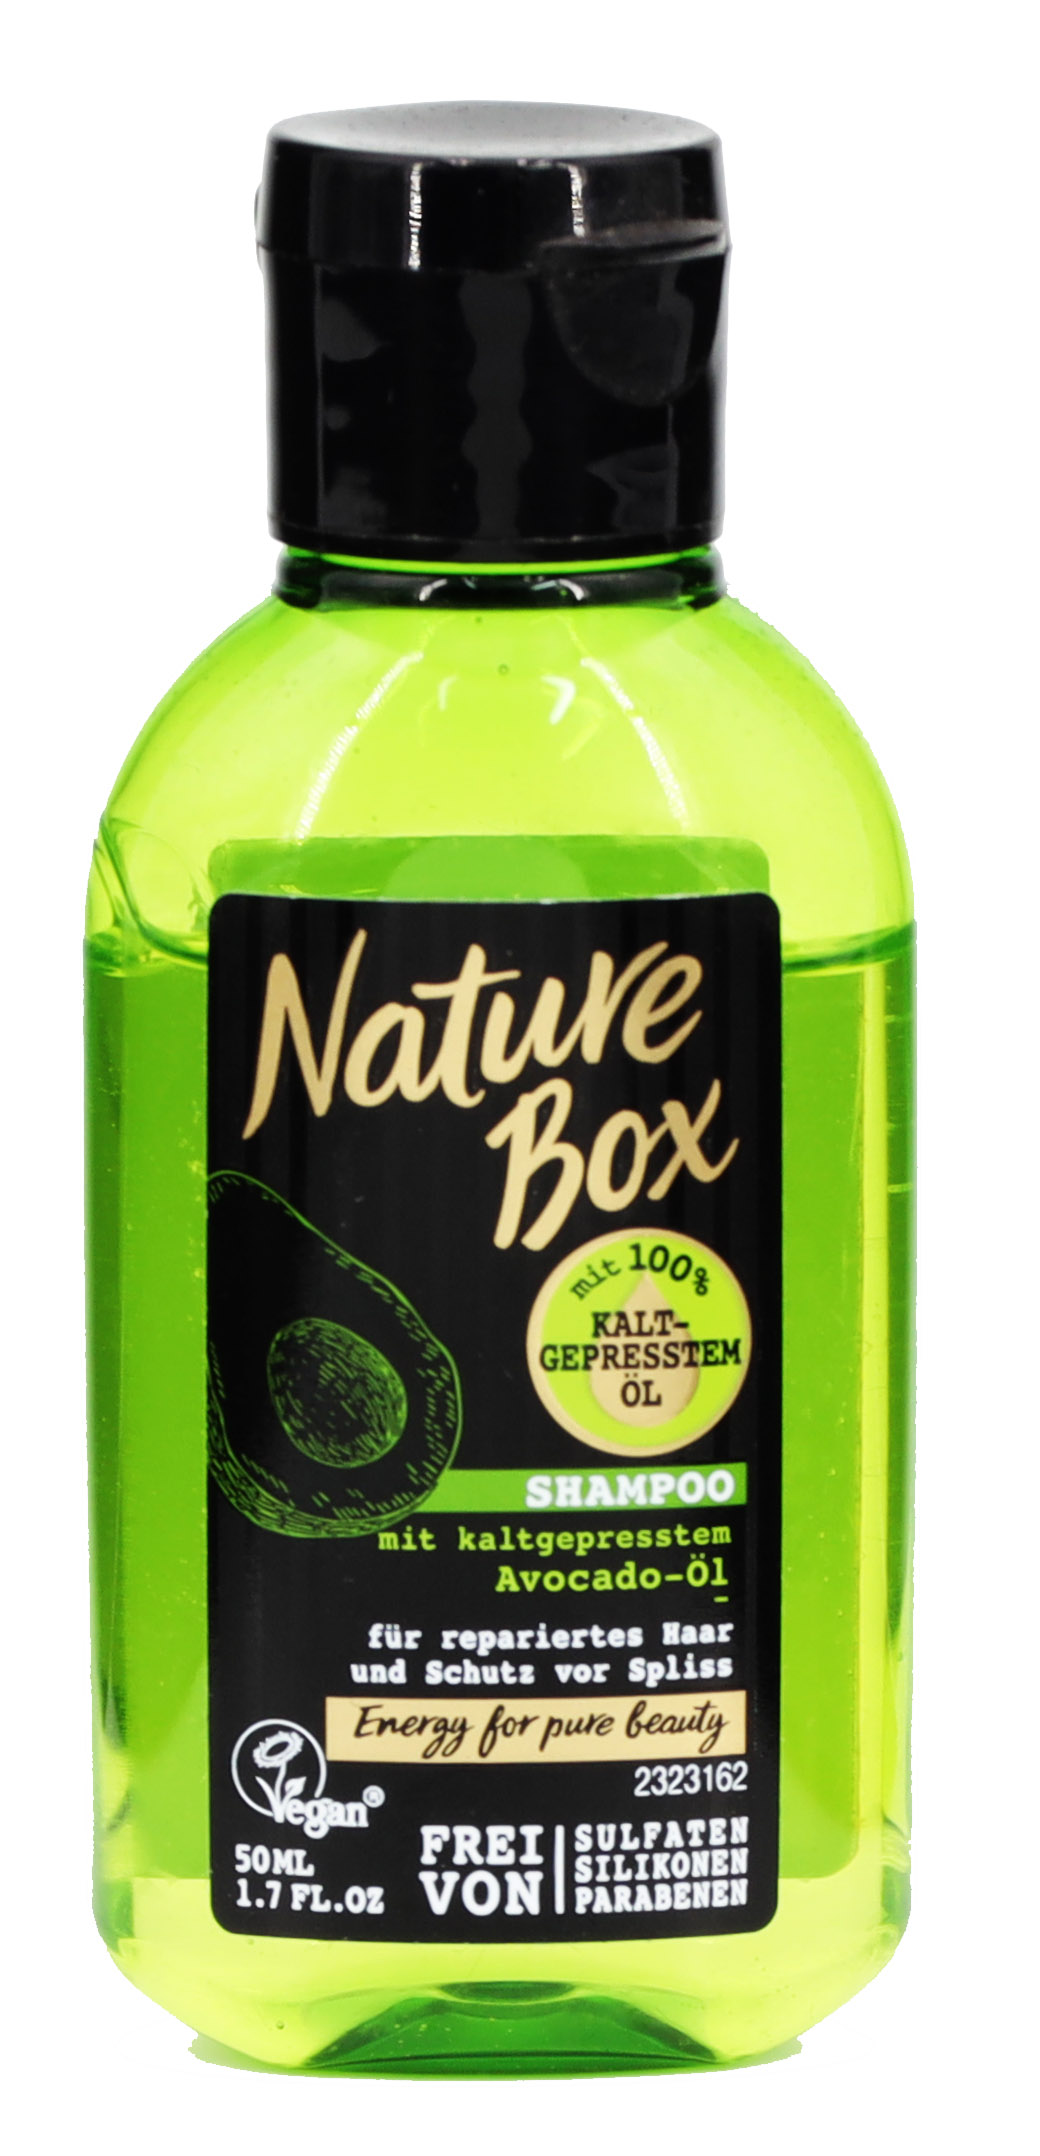 Nature Box Shampoo kaltgepresstem Avocado-Öl 50ml